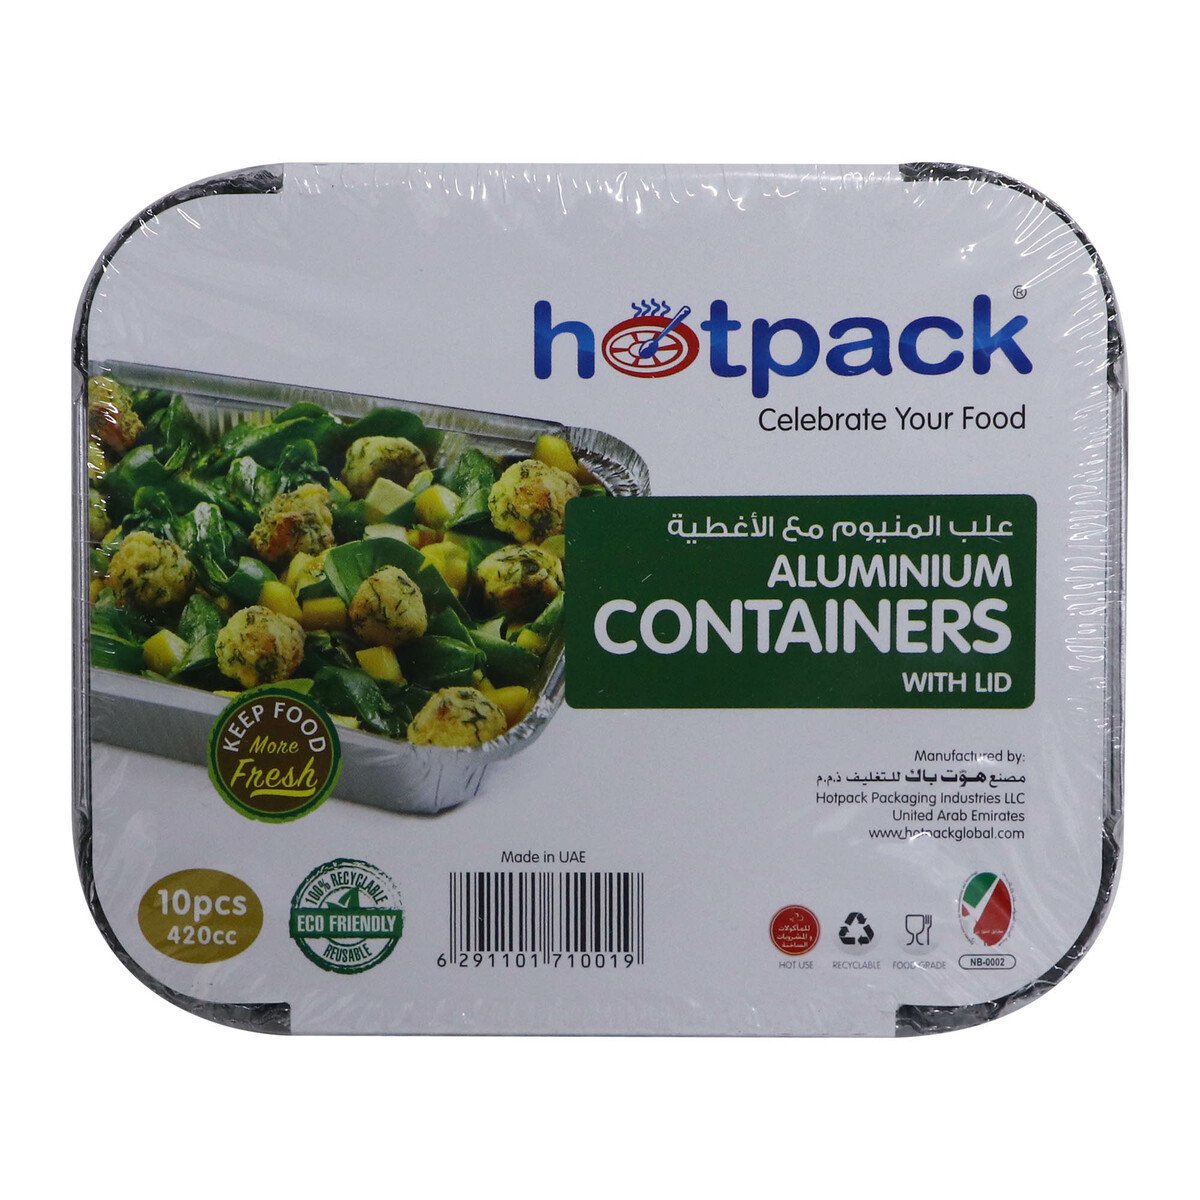 Hotpack Aluminium Containers With Lid 420cc 10pcs